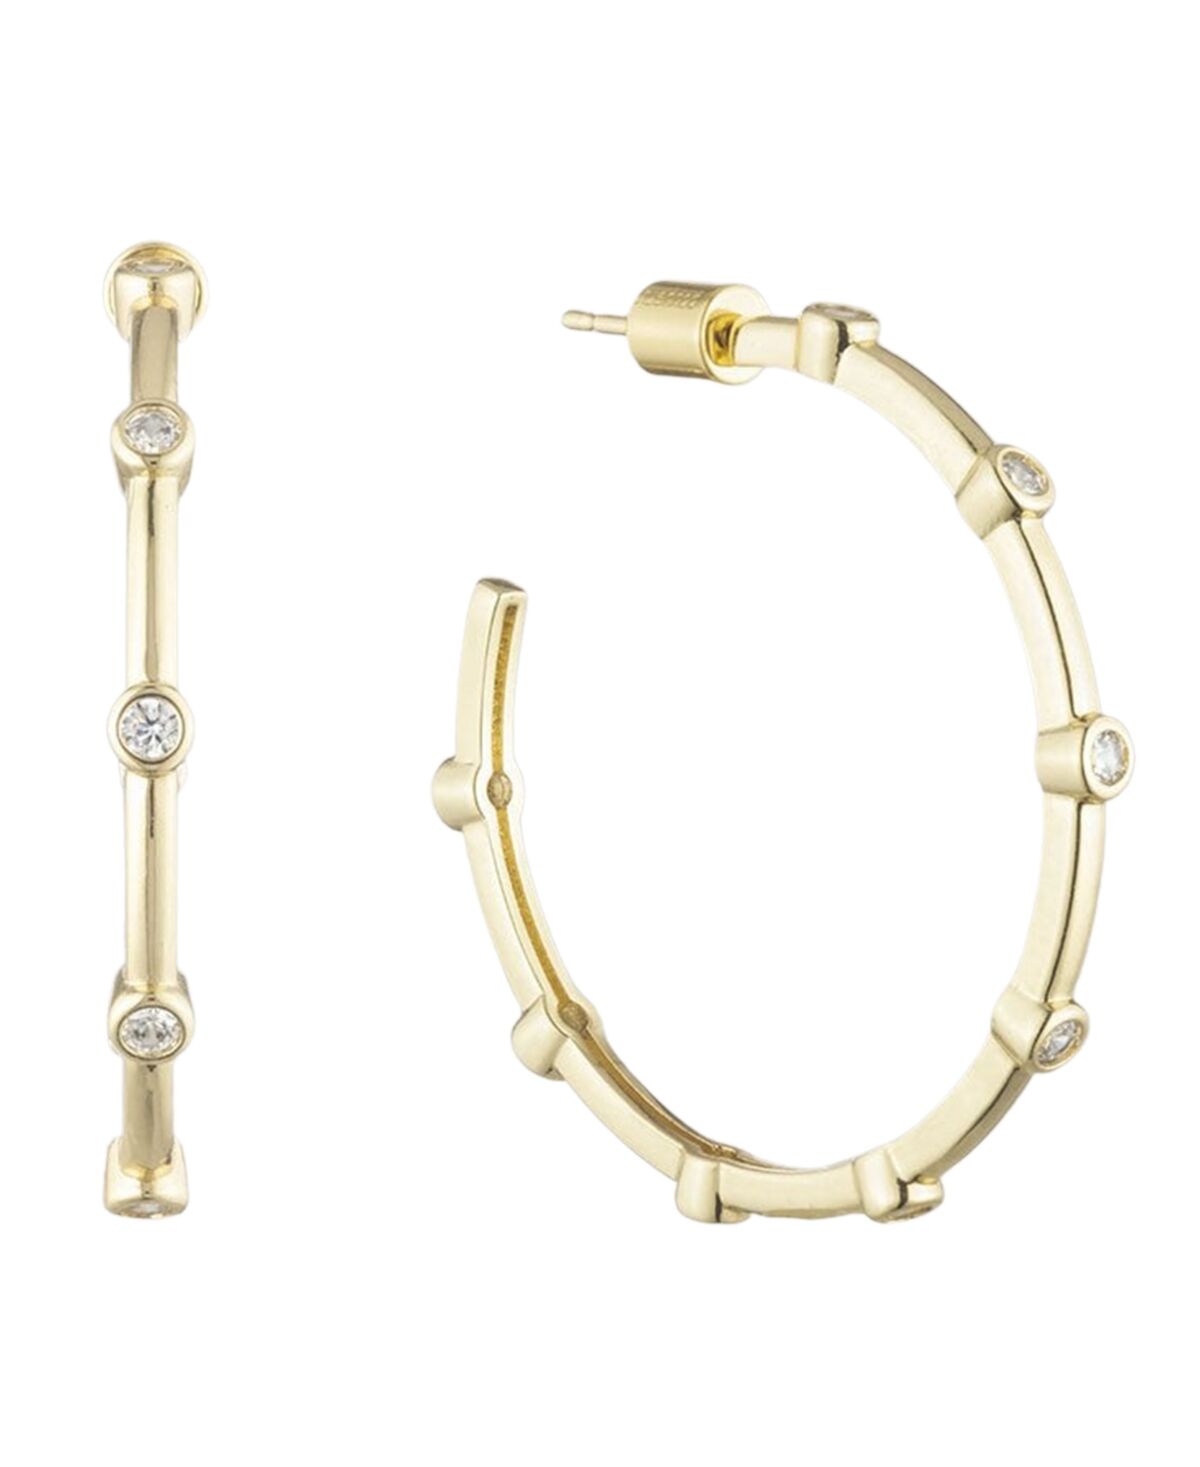 Bonheur Jewelry Diana Crystal Large Hoop Earrings - Karat Gold Plated Brass